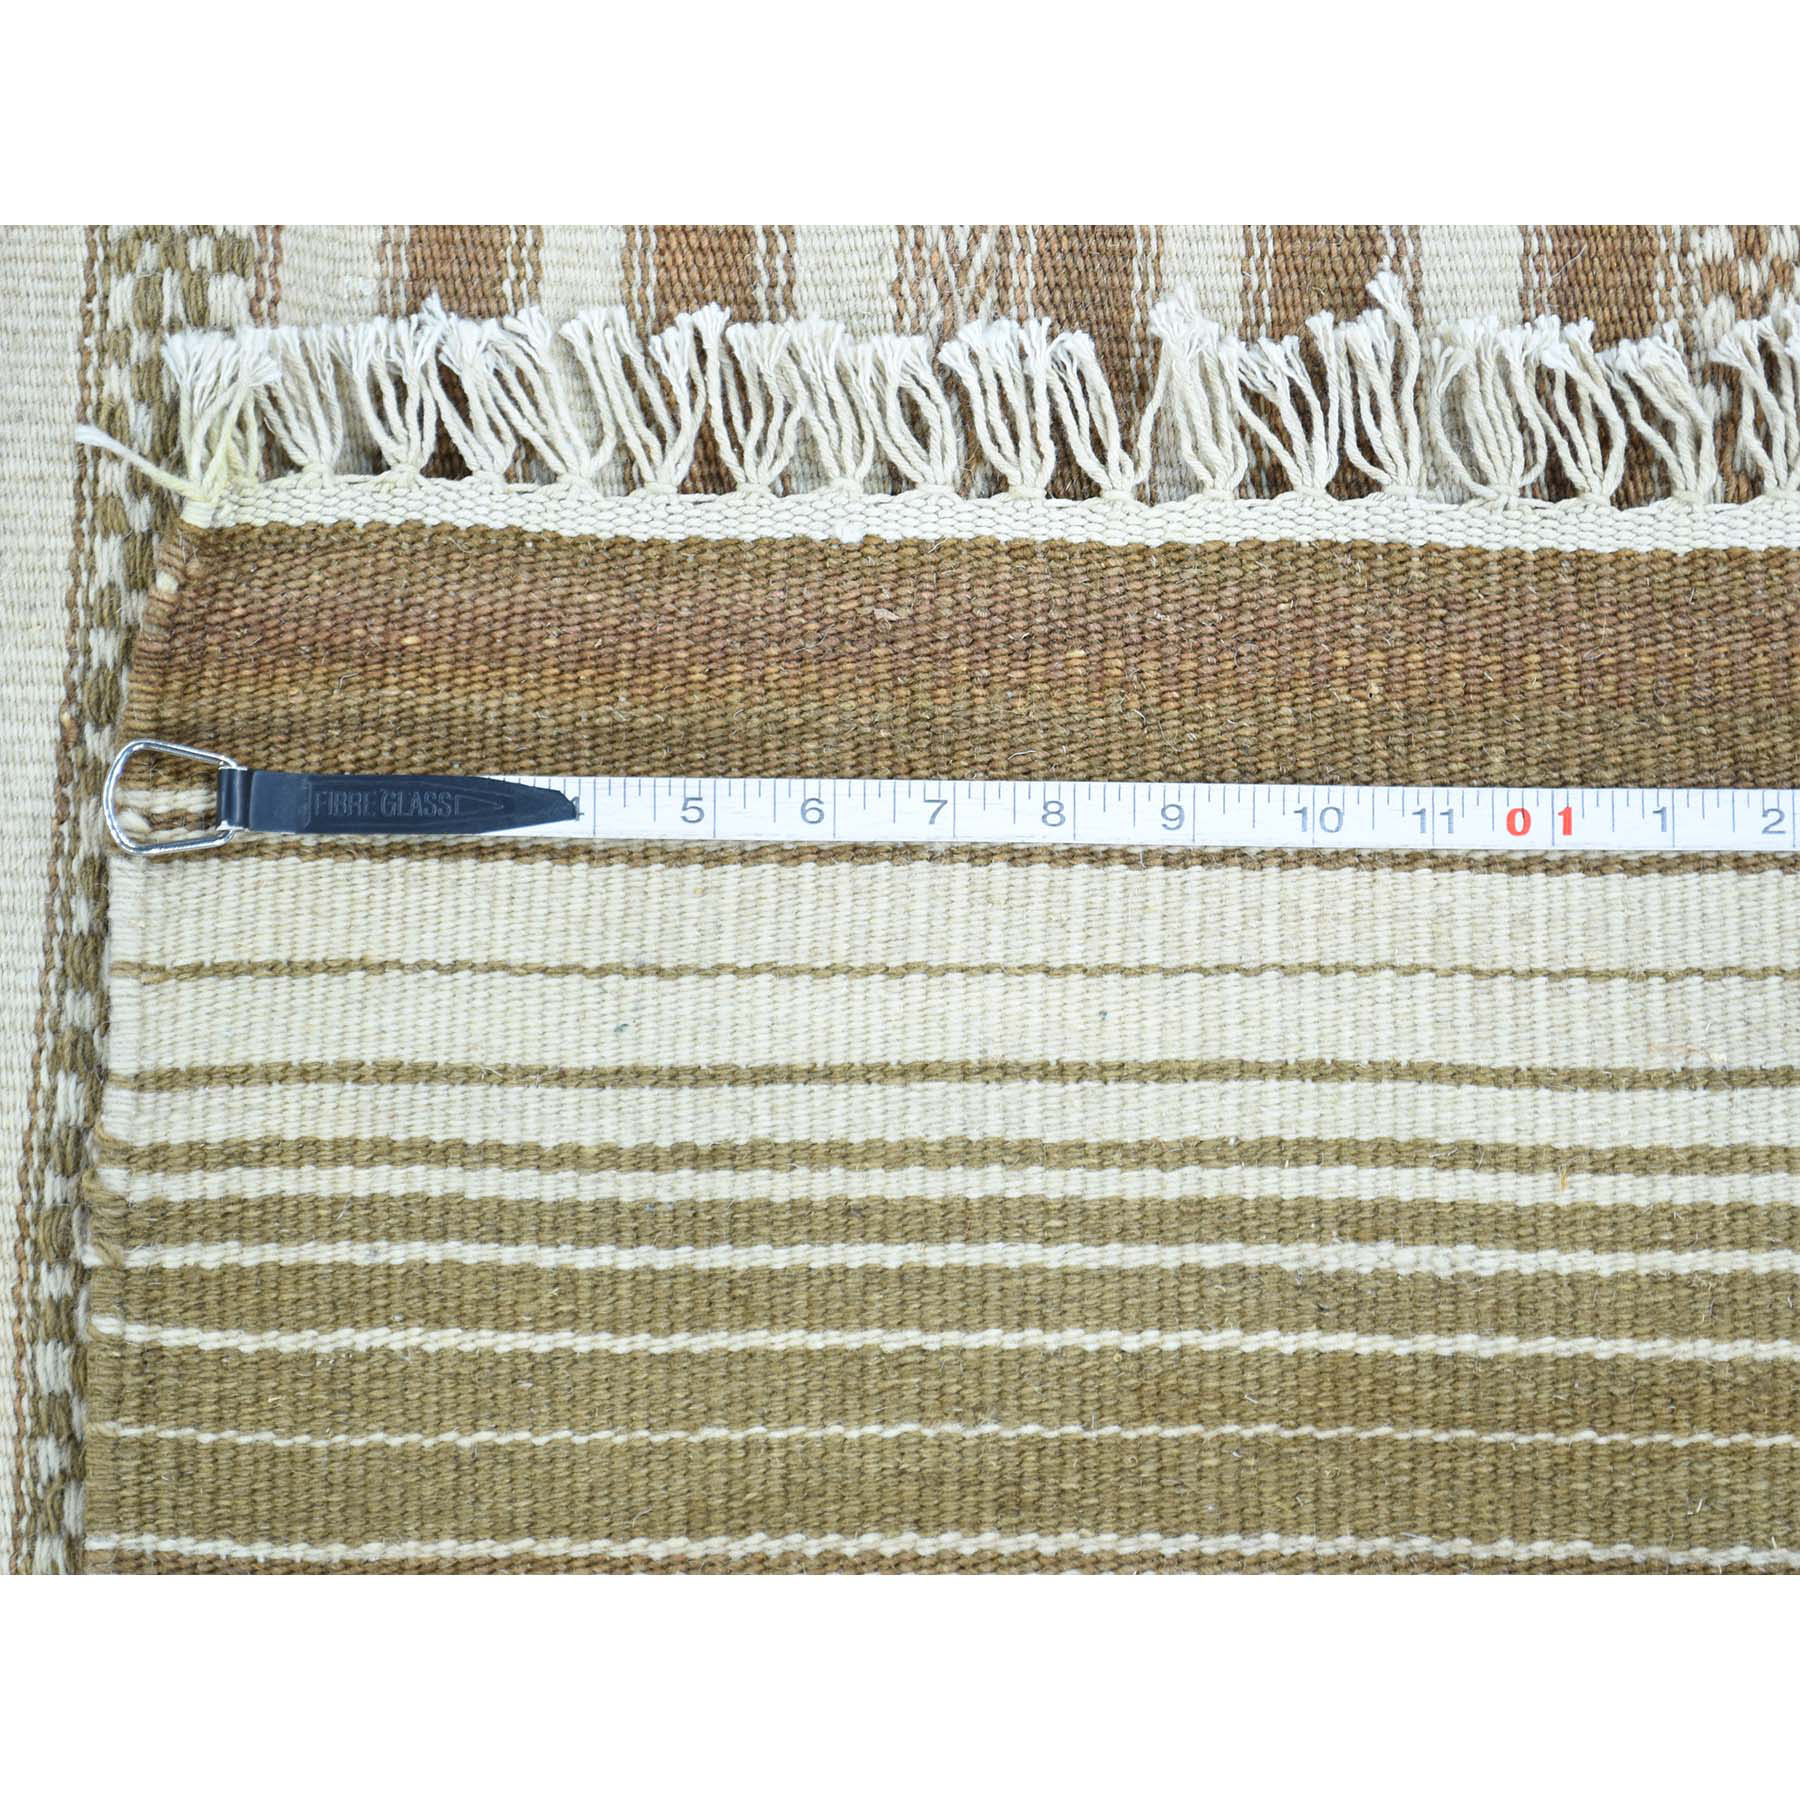 2-10 x5- Hand-Woven Striped Durie Kilim Flat Weave Oriental Carpet 